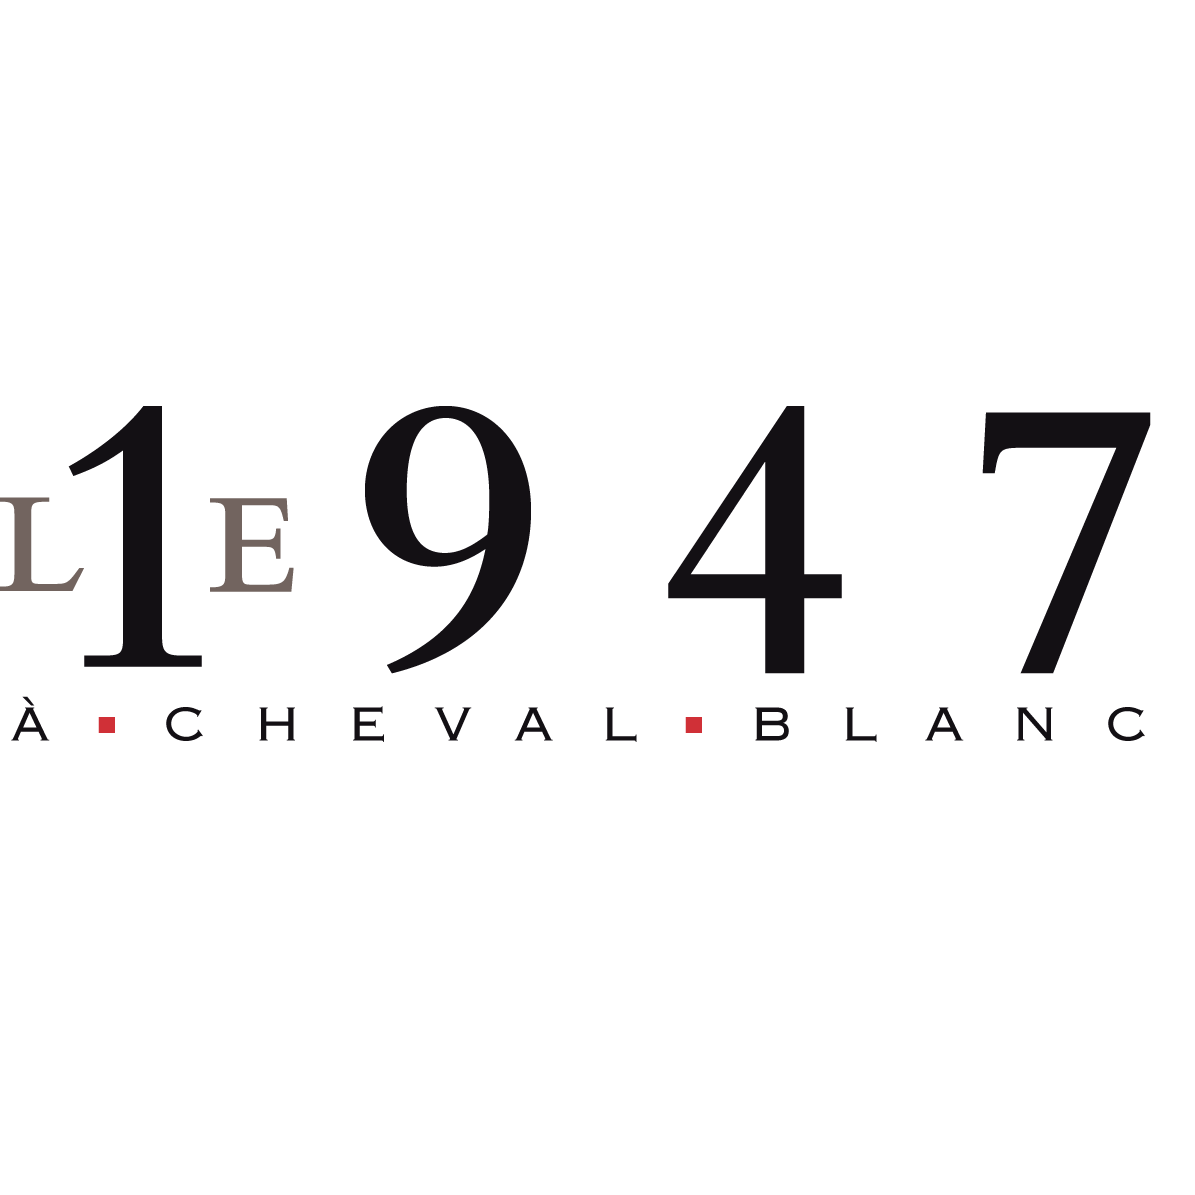 Le 1947 à Cheval Blanc Logo